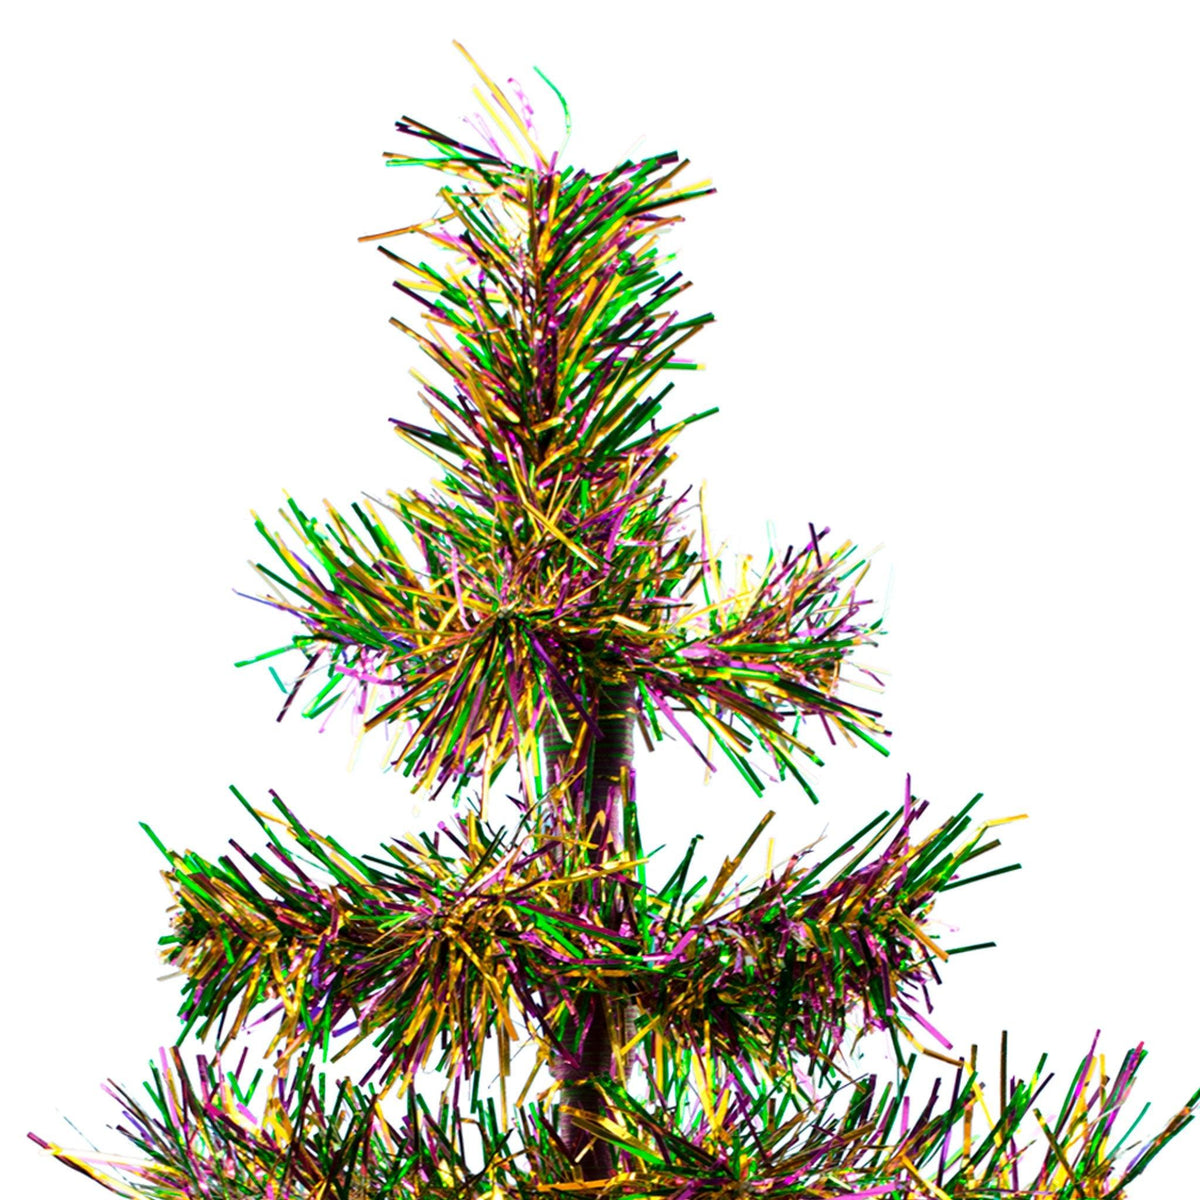 Lee Display's Festive Mardi Gras Tinsel Christmas Trees on sale only at leedisplay.com